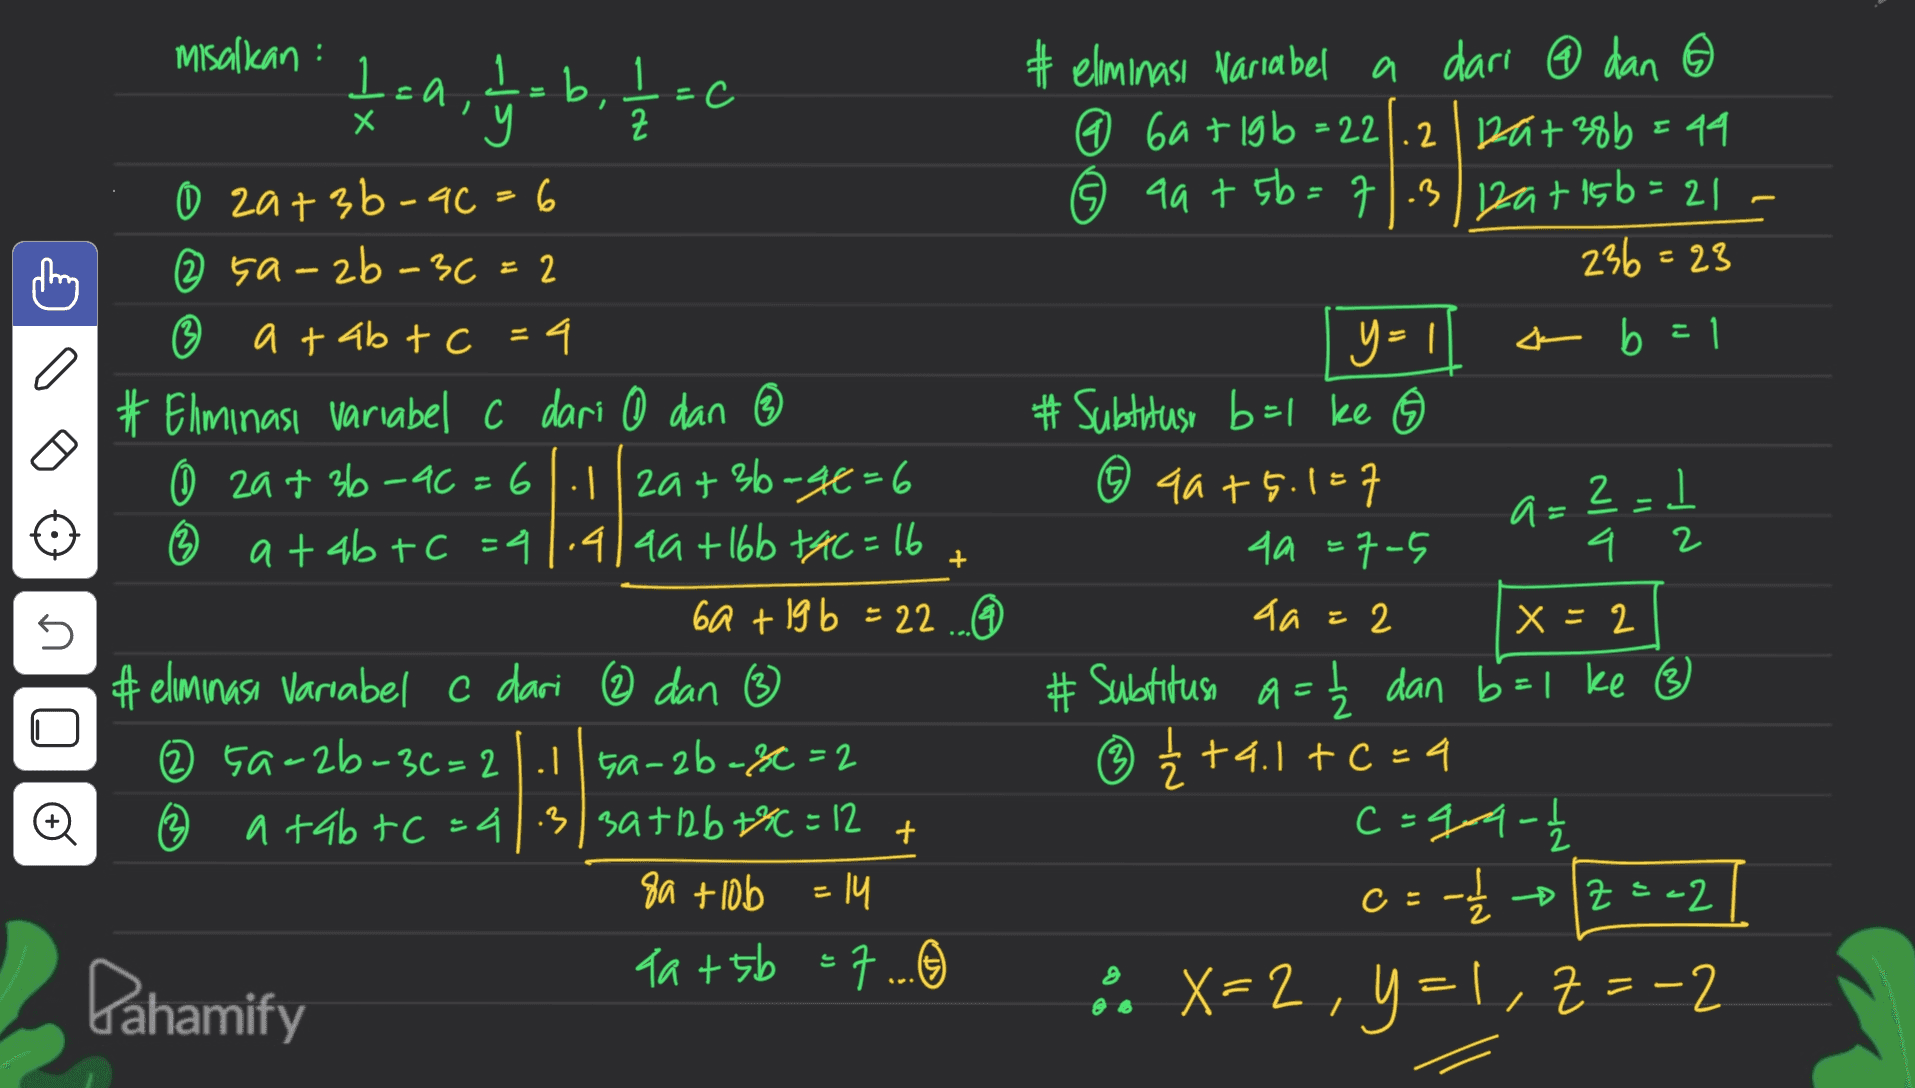 Lea jab, tad Isa, x y=1 a misalkan : =c y 0 2a+3b-4c=6 6 ② sa-2b-36=2 2 ® a + ab + c = 4 # Elminası variabel c dari 0 dan ③ 0 29+ 36-96=6|1|2a+36-46=6 © at abt C =41.4149+16b +AC=16 60 + 19 b = 22 6 #eliminasi Variabel c dari ② dan (3) 2 ça-2b-3c=21.15a-2b-8c=2 (2 atab tc=413|3at12b +* =12 89 tlob = 14 Ka tsb = 7 ... O Pahamify #eliminasi Nariabel a dari ② dan ③ 6 6a+ 1gb =22.212a+38b = 44 6 44+ 5b=71.3/bat 15b=21 - 236=23 4 b=1 # Subtitusi b=1 ke 6 0 44+5.1=7 2-) 4a=7-5 4 aa = 2 x = 2 # Subtitusi a= Ź dan b = 1 ke 3 1 { +41 +0=4 c=909- 0=-1--2--2] é X= 2, Y=l, Z = -2 X=2 Z 2 + U 2 o + = 